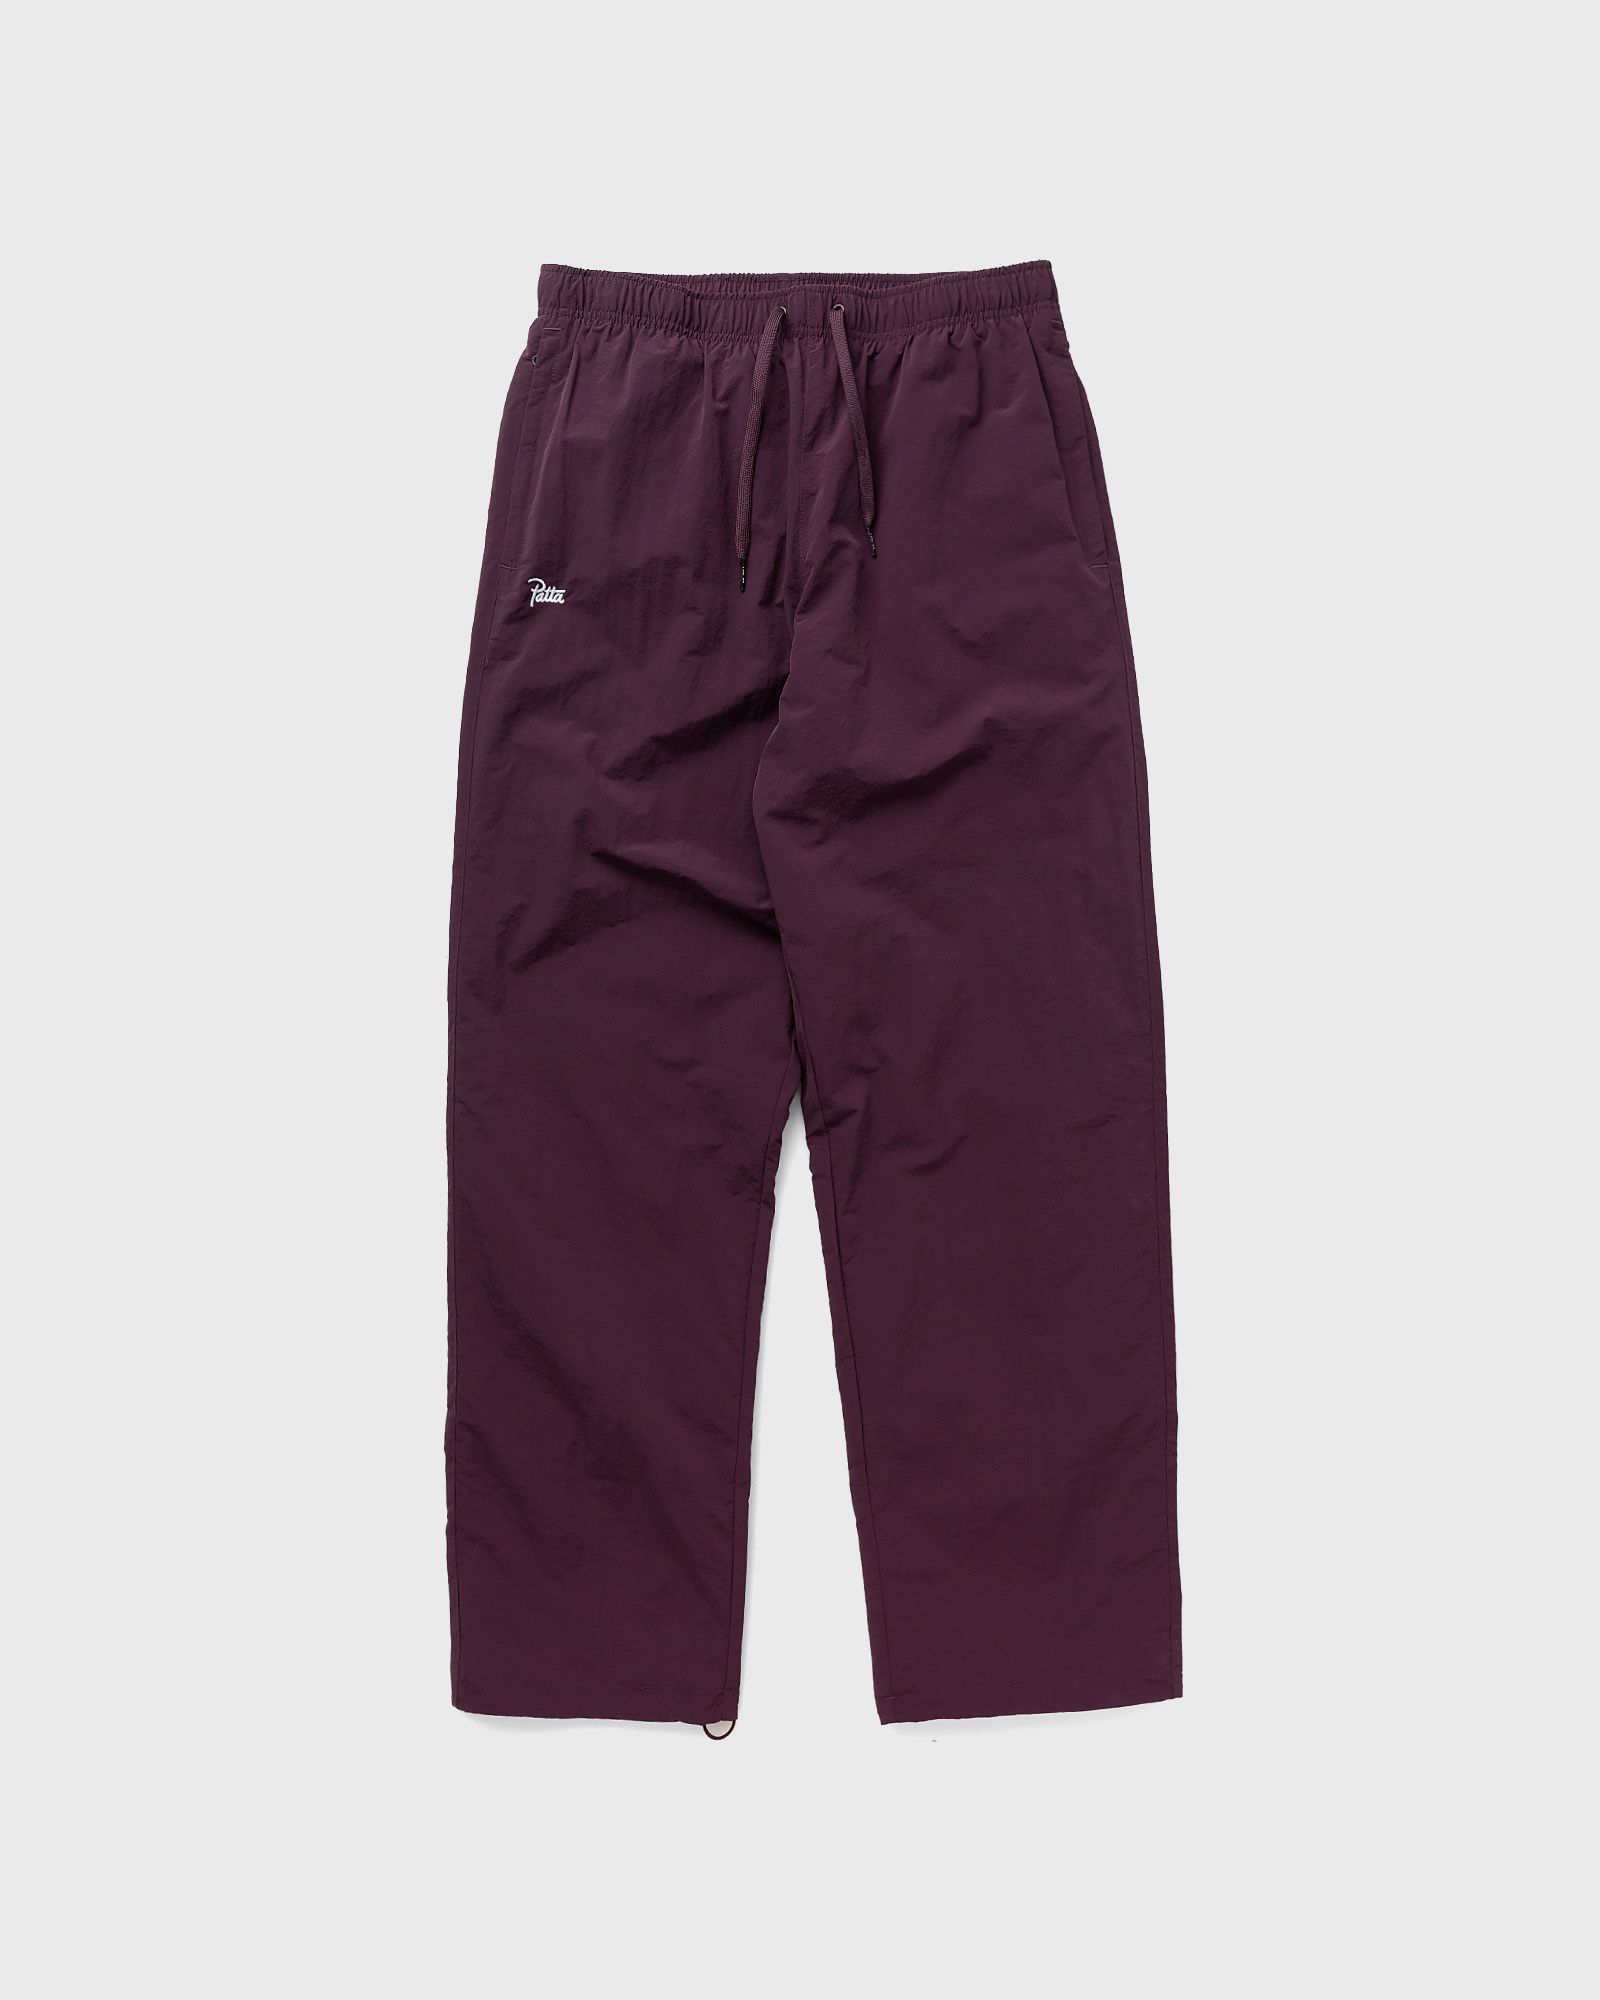 PATTA - basic nylon m2 track pants men track pants purple in größe:xl